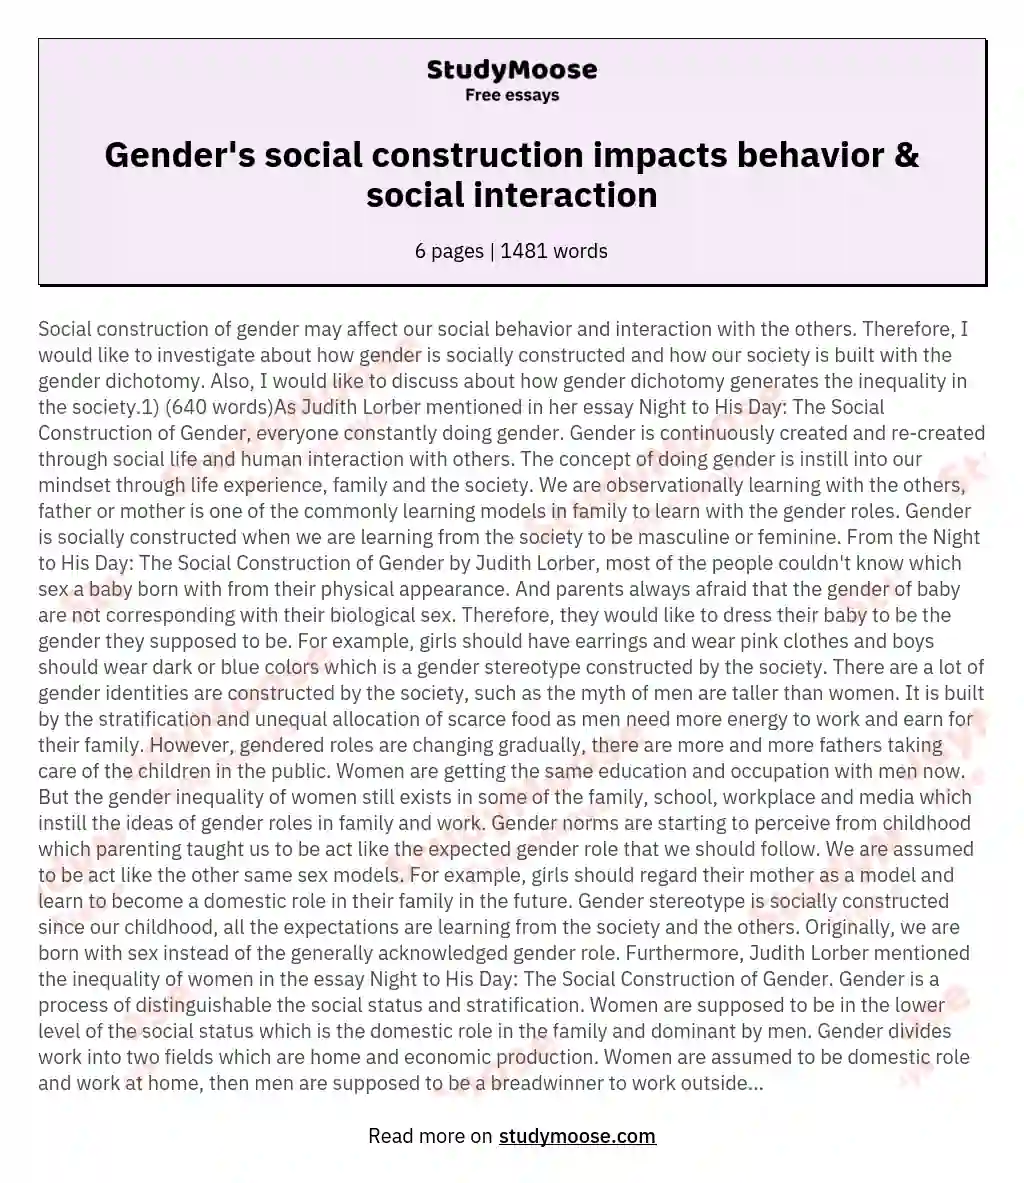 Gender's social construction impacts behavior & social interaction essay